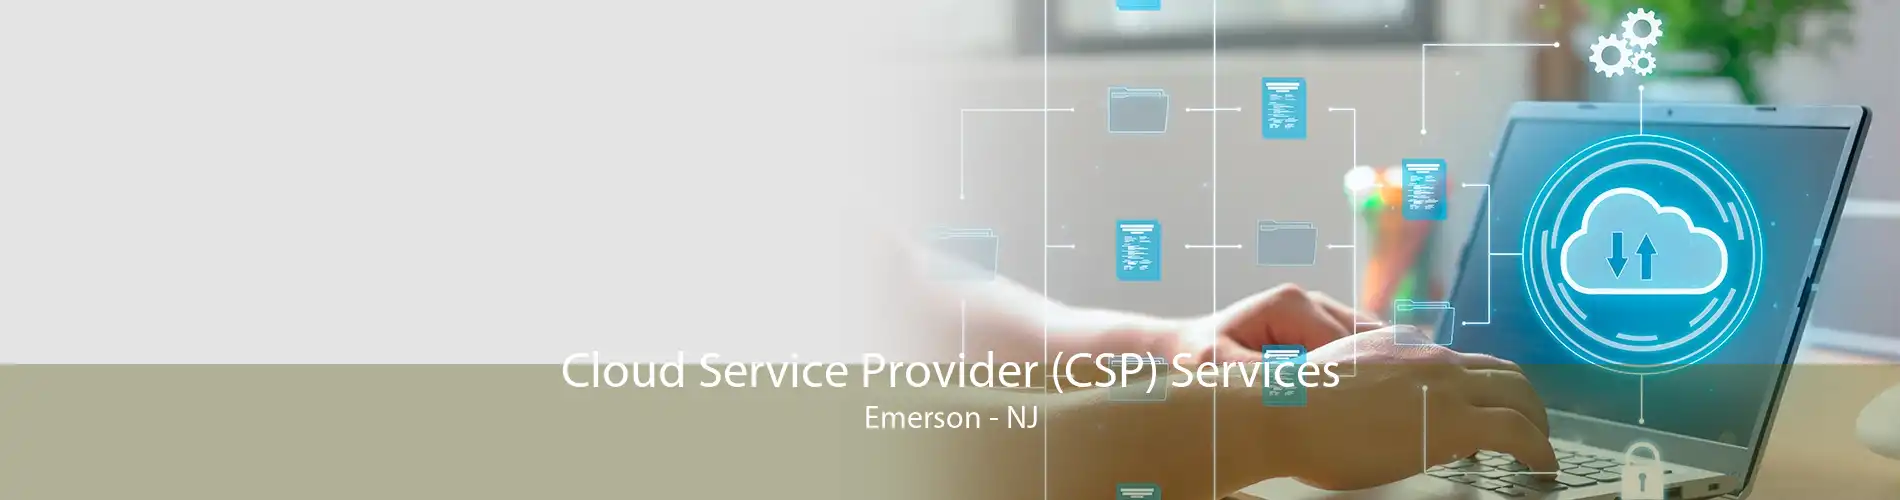 Cloud Service Provider (CSP) Services Emerson - NJ